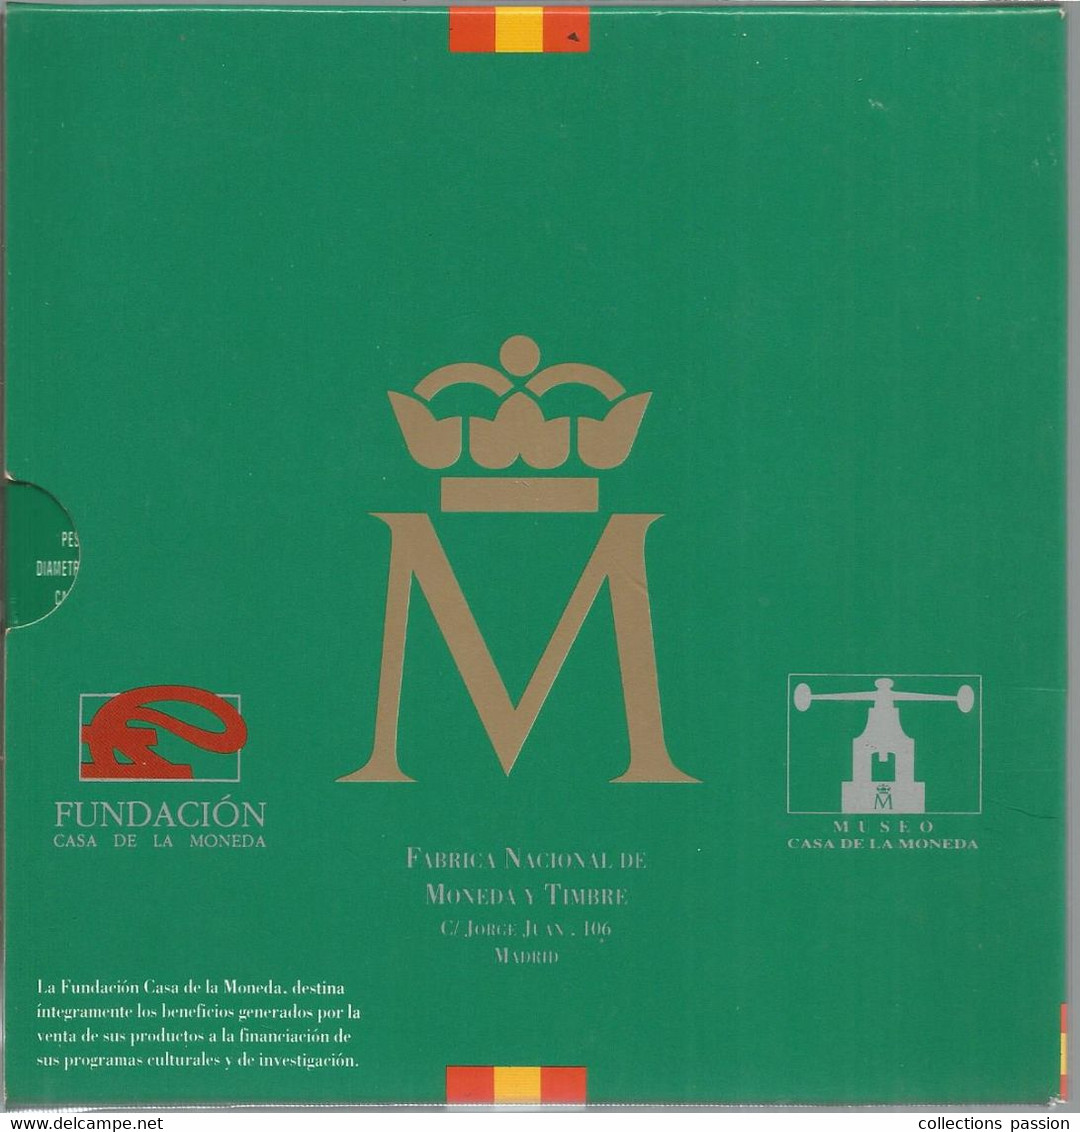 JC, Coleccion De Monedas Espanolas De Curso Legal , Pruebasnumismat, Acunaciones Del 93 ,1993 ,5 Scans , Frais Fr 4.00 E - Sammlungen